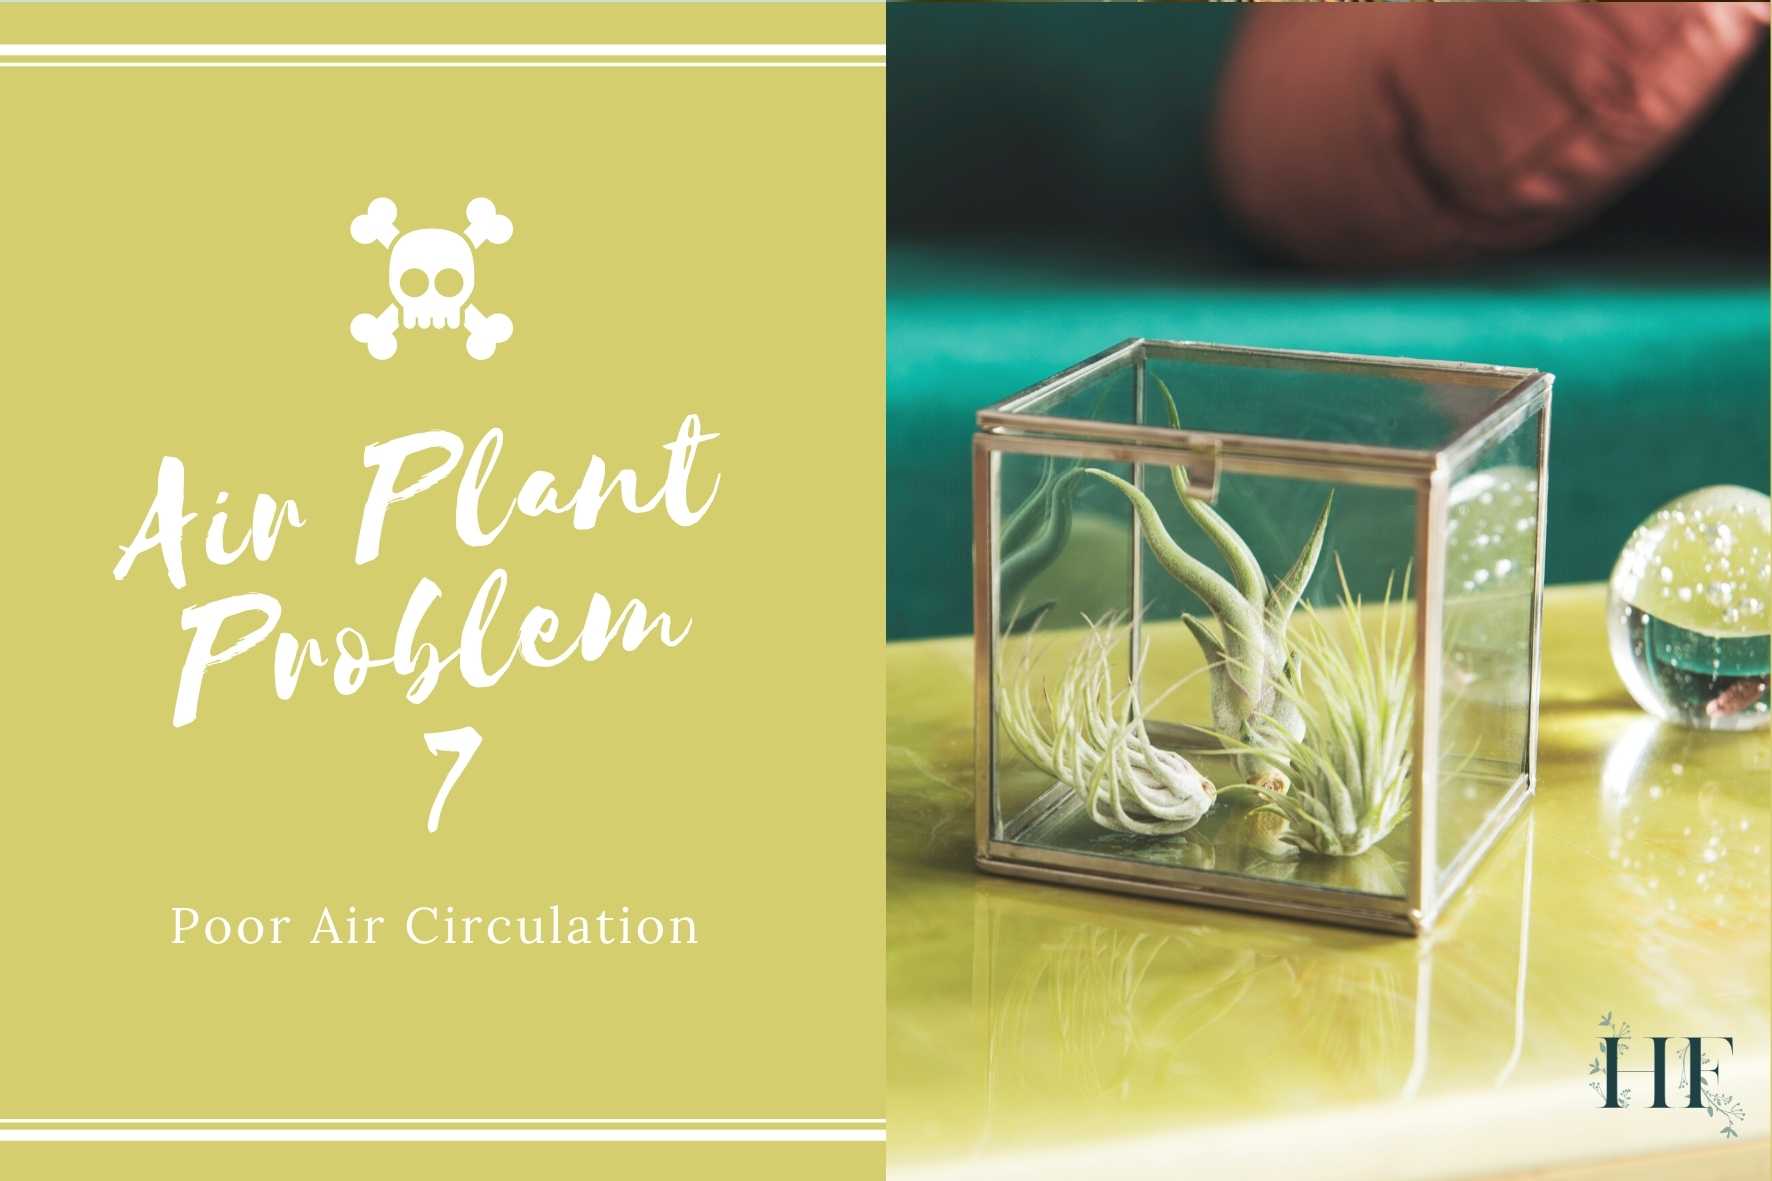 air-plant-problems-7-poor-air-circulation